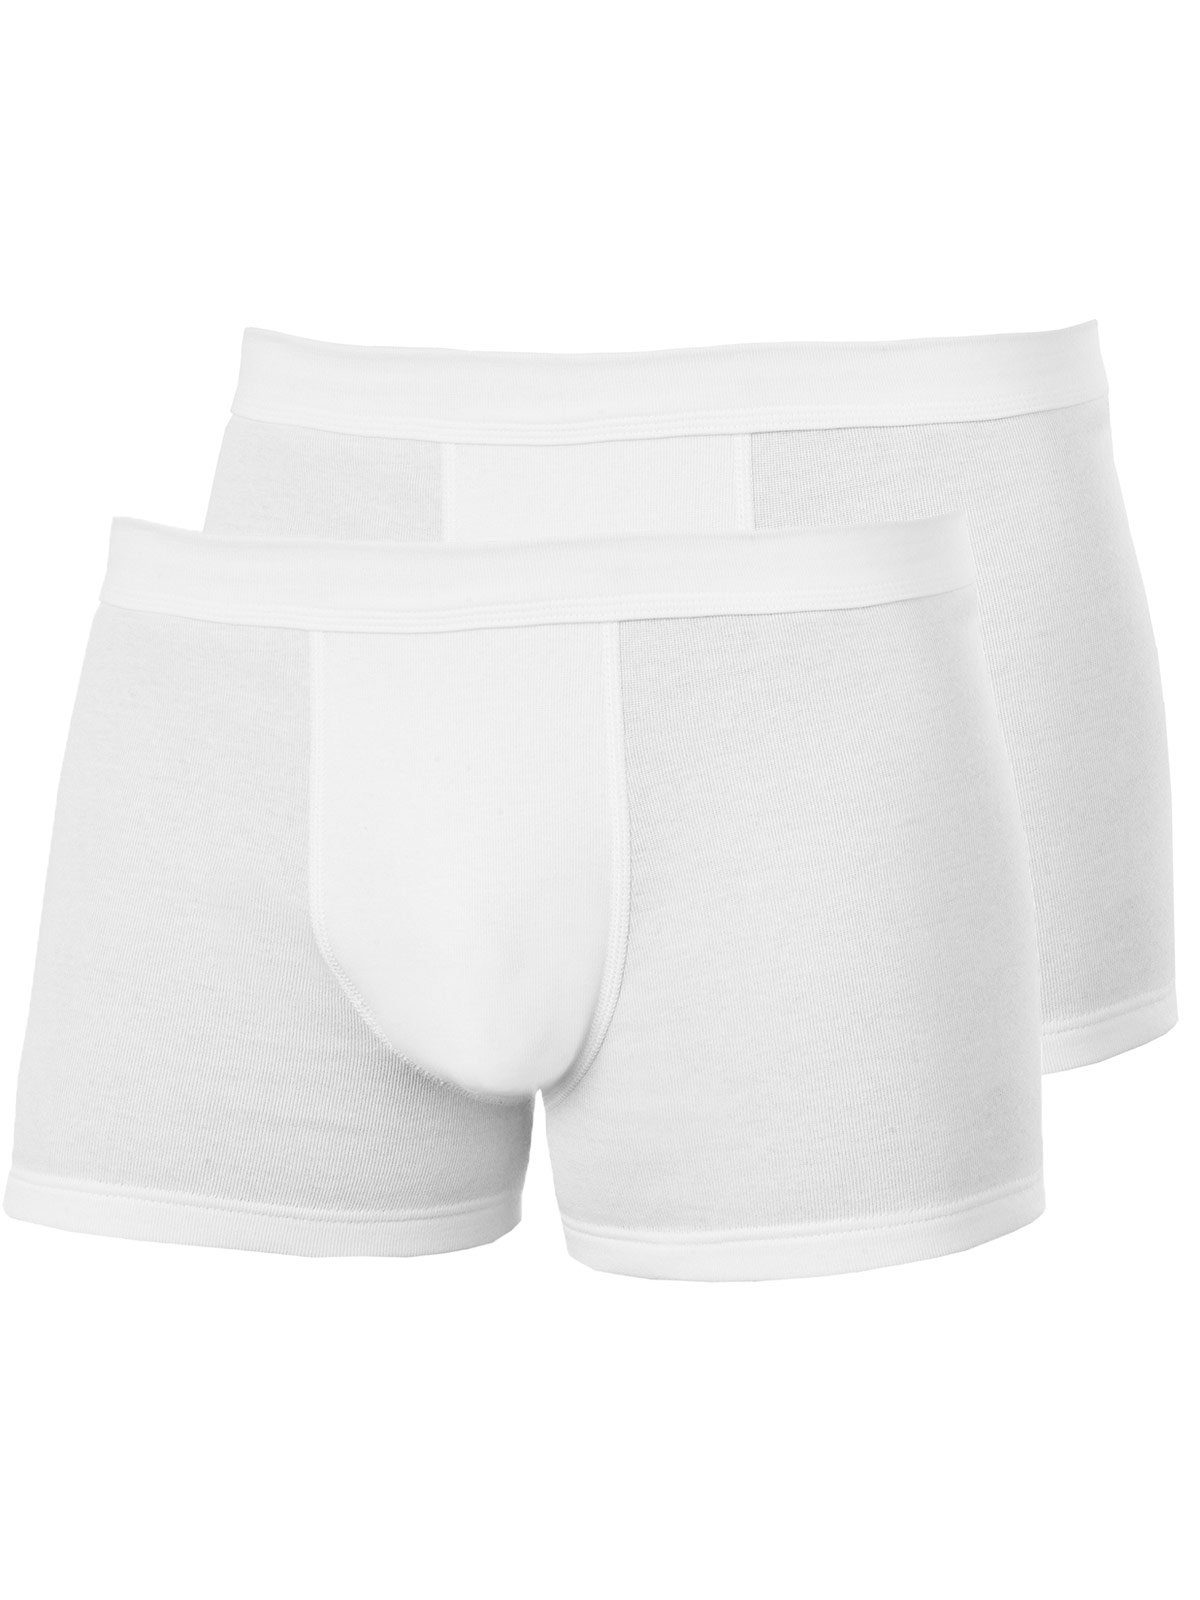 Retro Pants Herren 4er Sparpack steingrau-melange - Cotton weiss Bio KUMPF Pants 4-St) (Spar-Set,